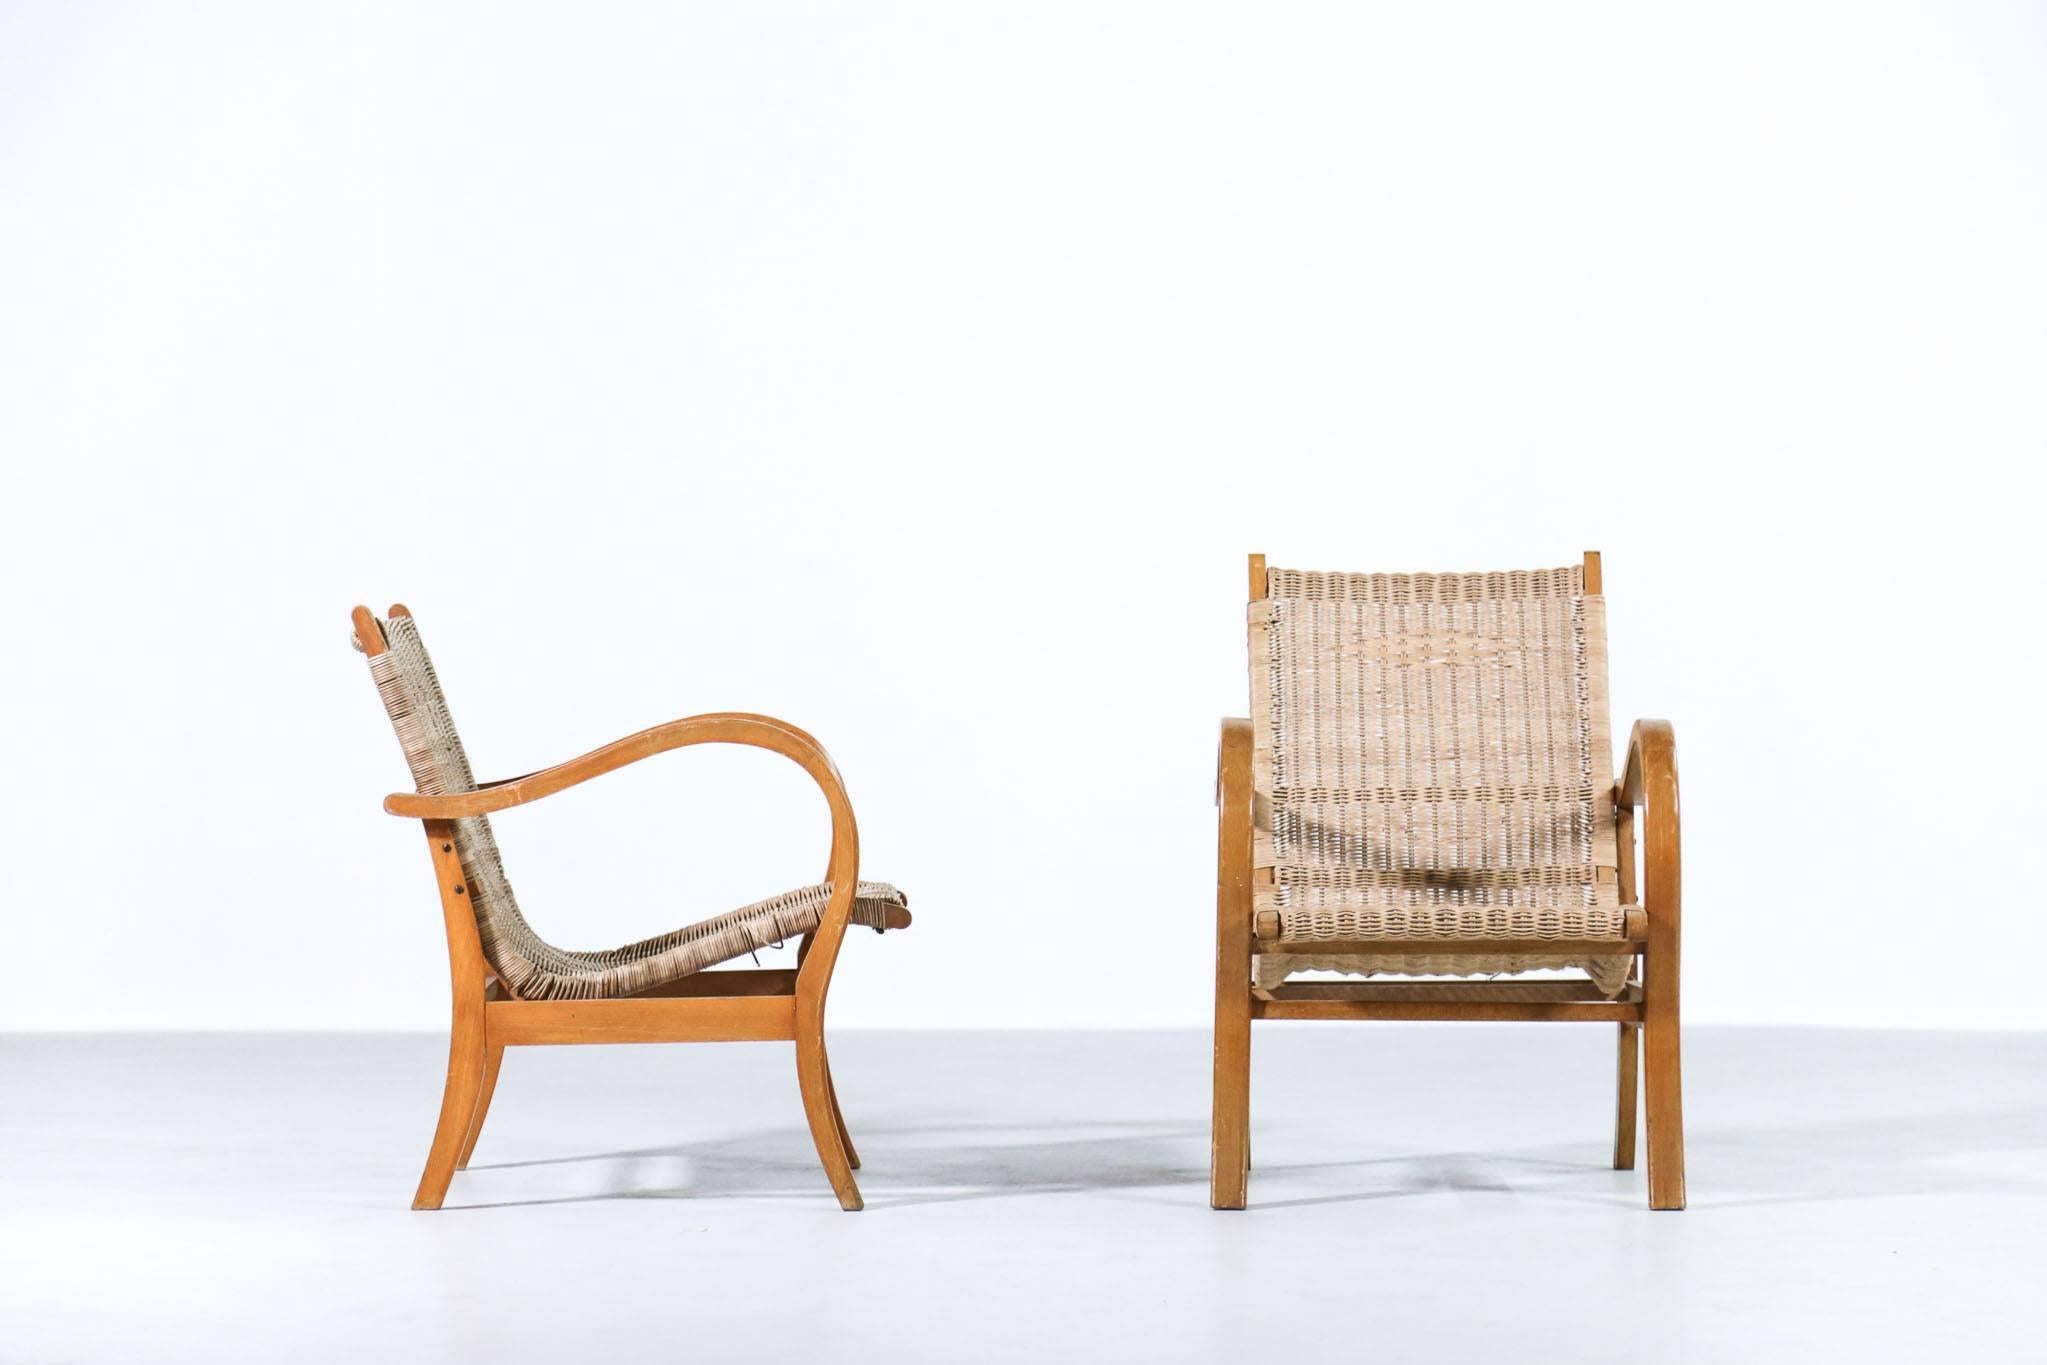 Nice armchairs in the style of Erich Dieckmann.
German design.